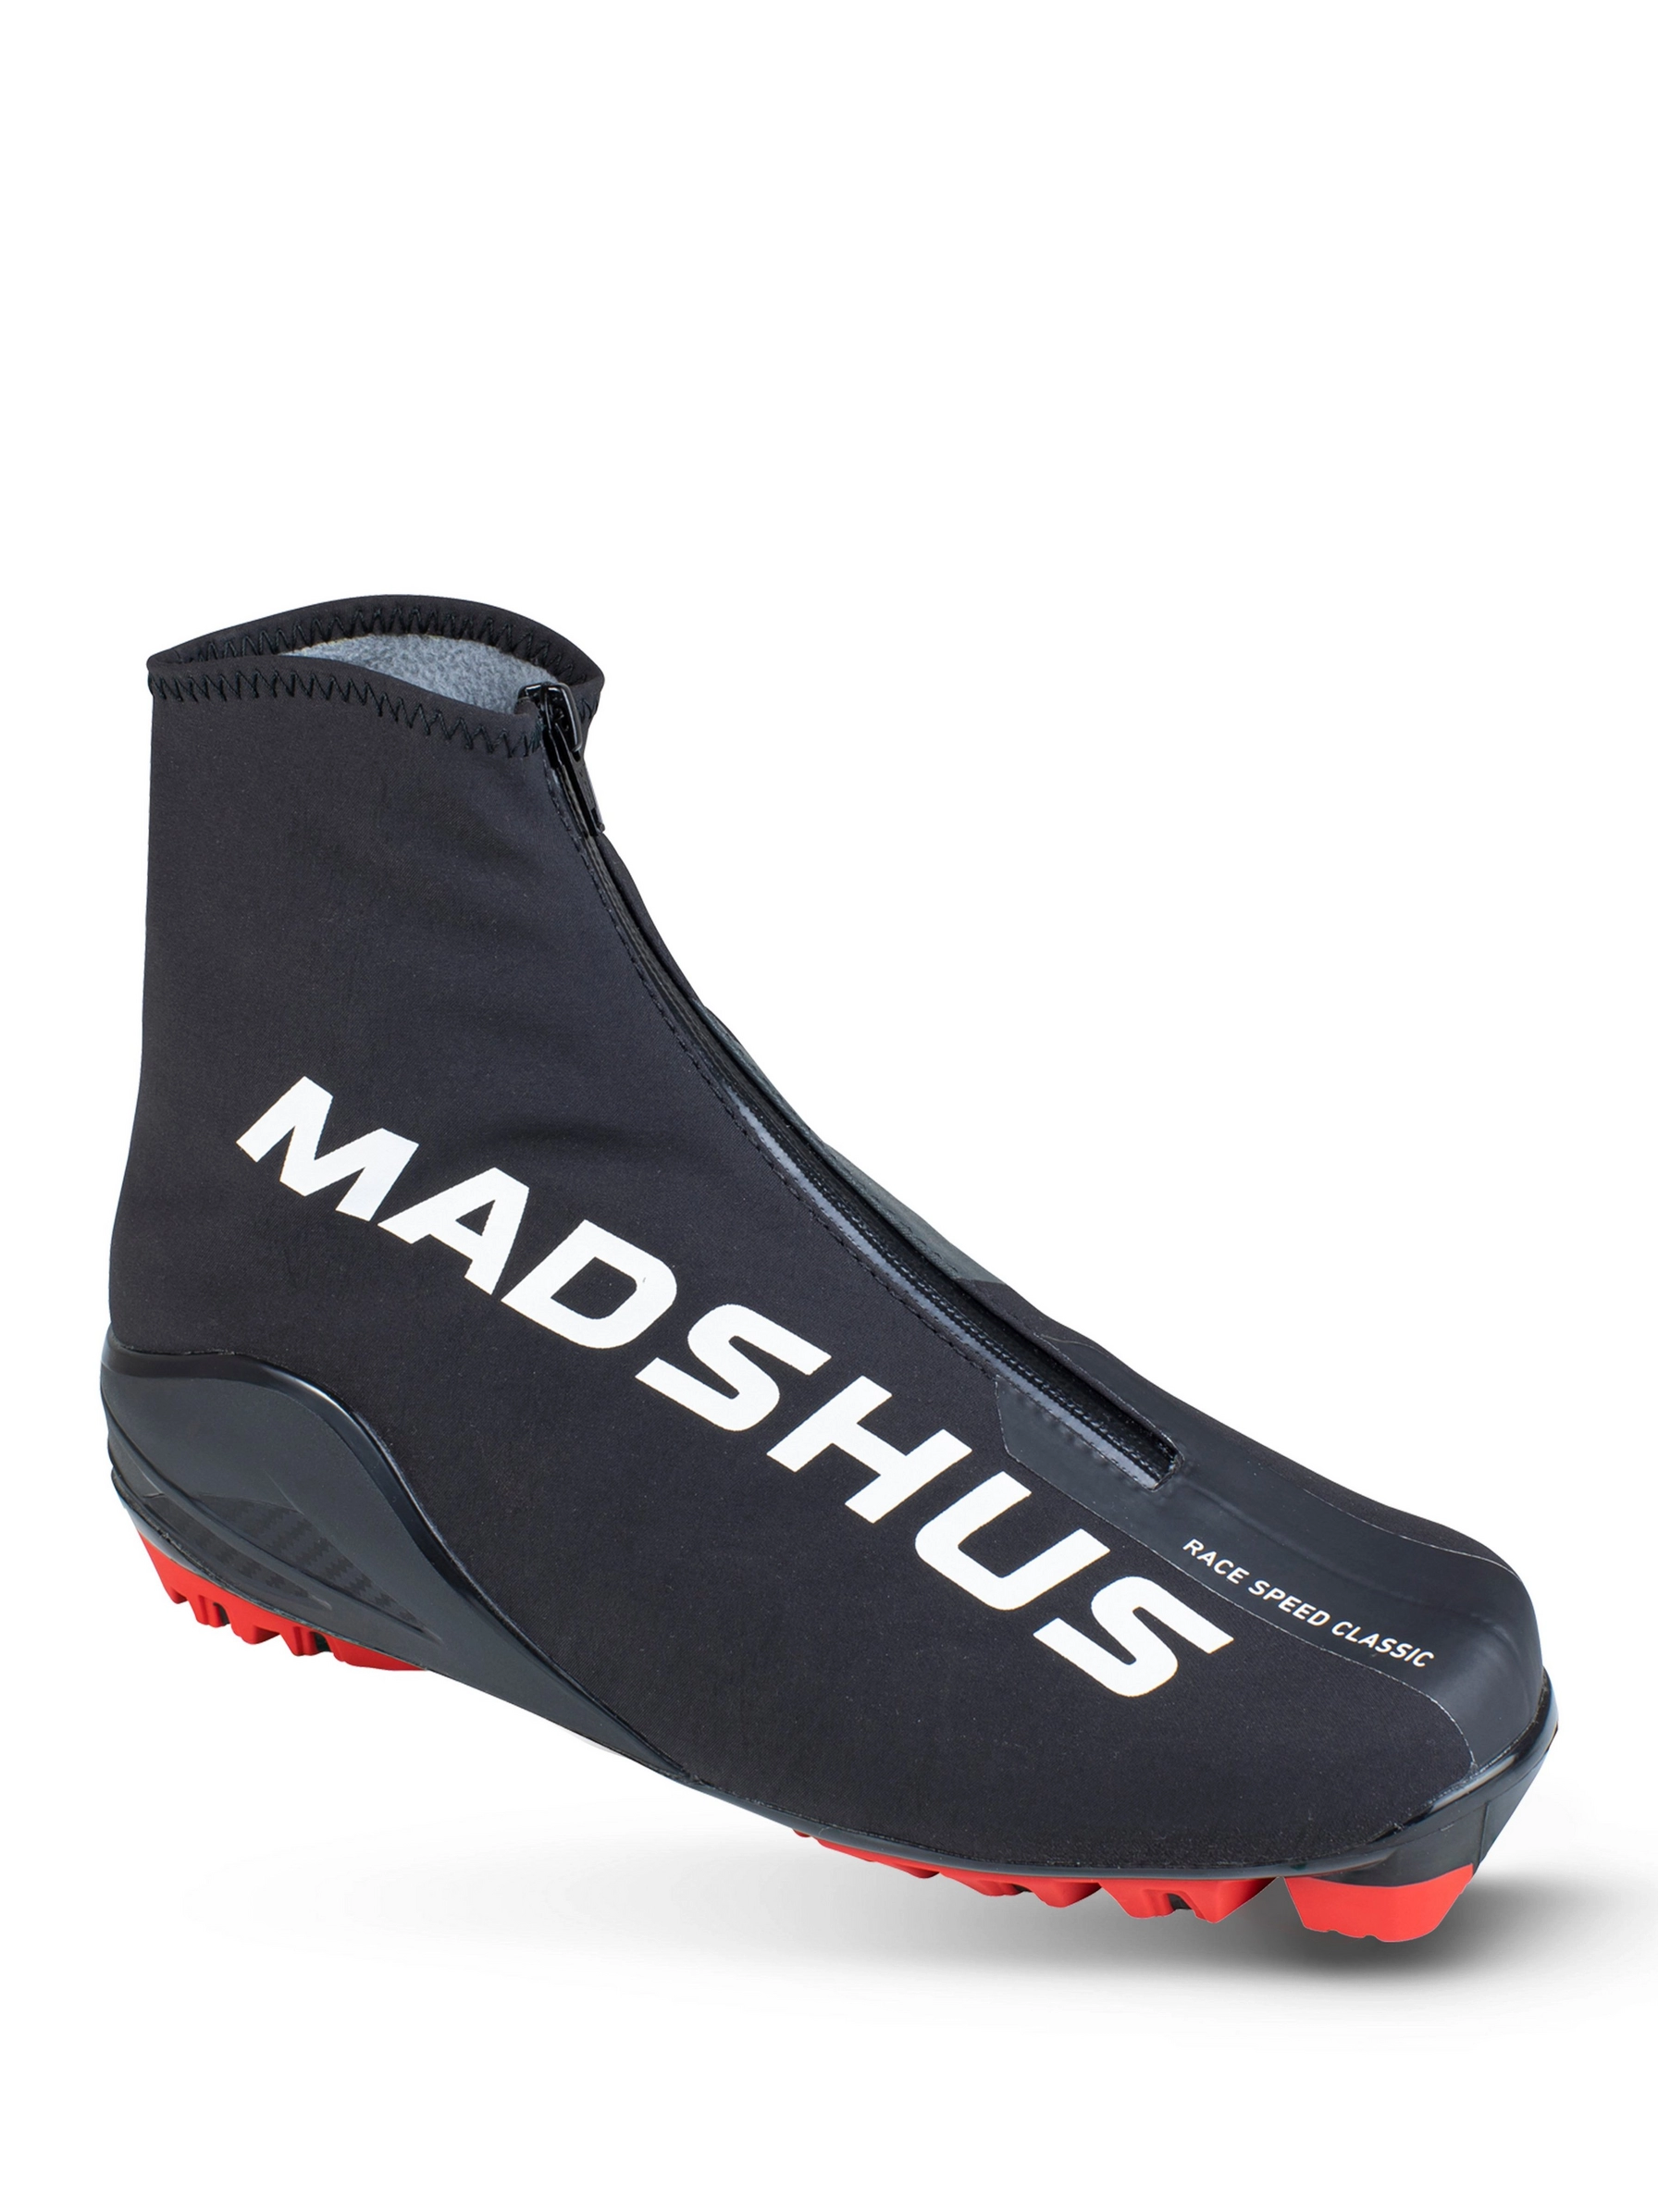 Madshus Race Speed Classic Schuh